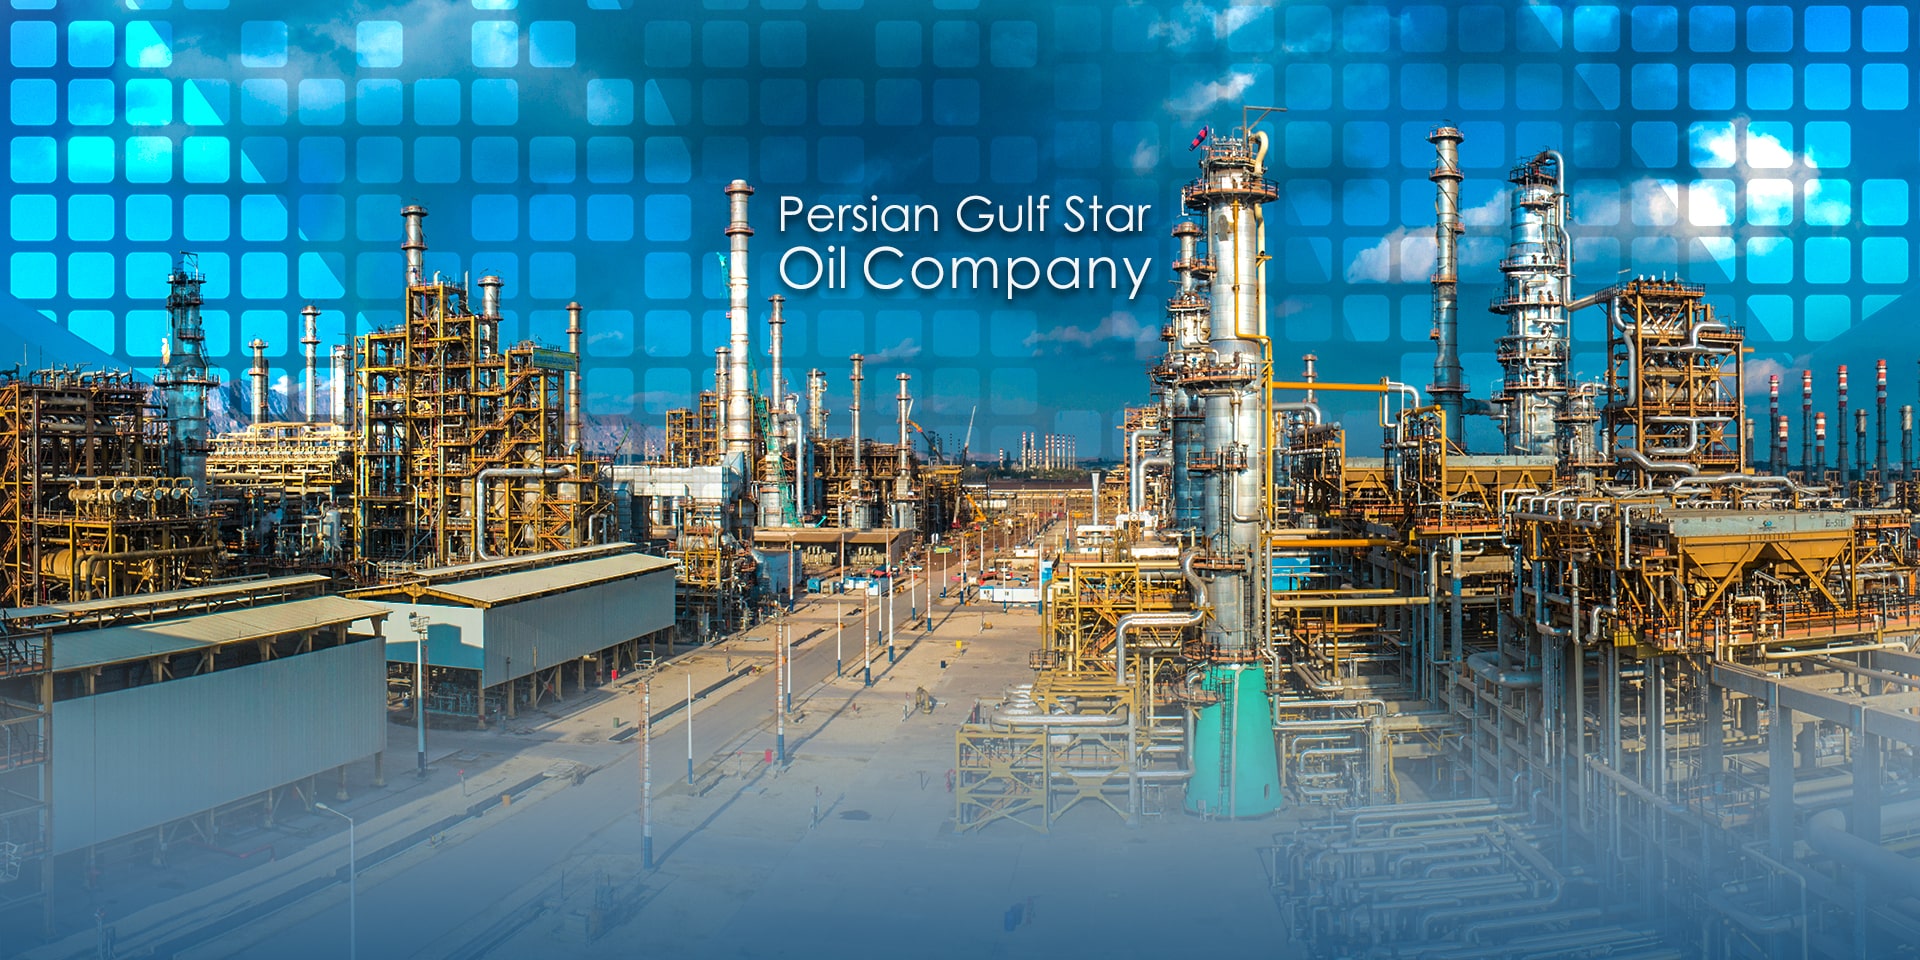 Gulf Star Oil Company